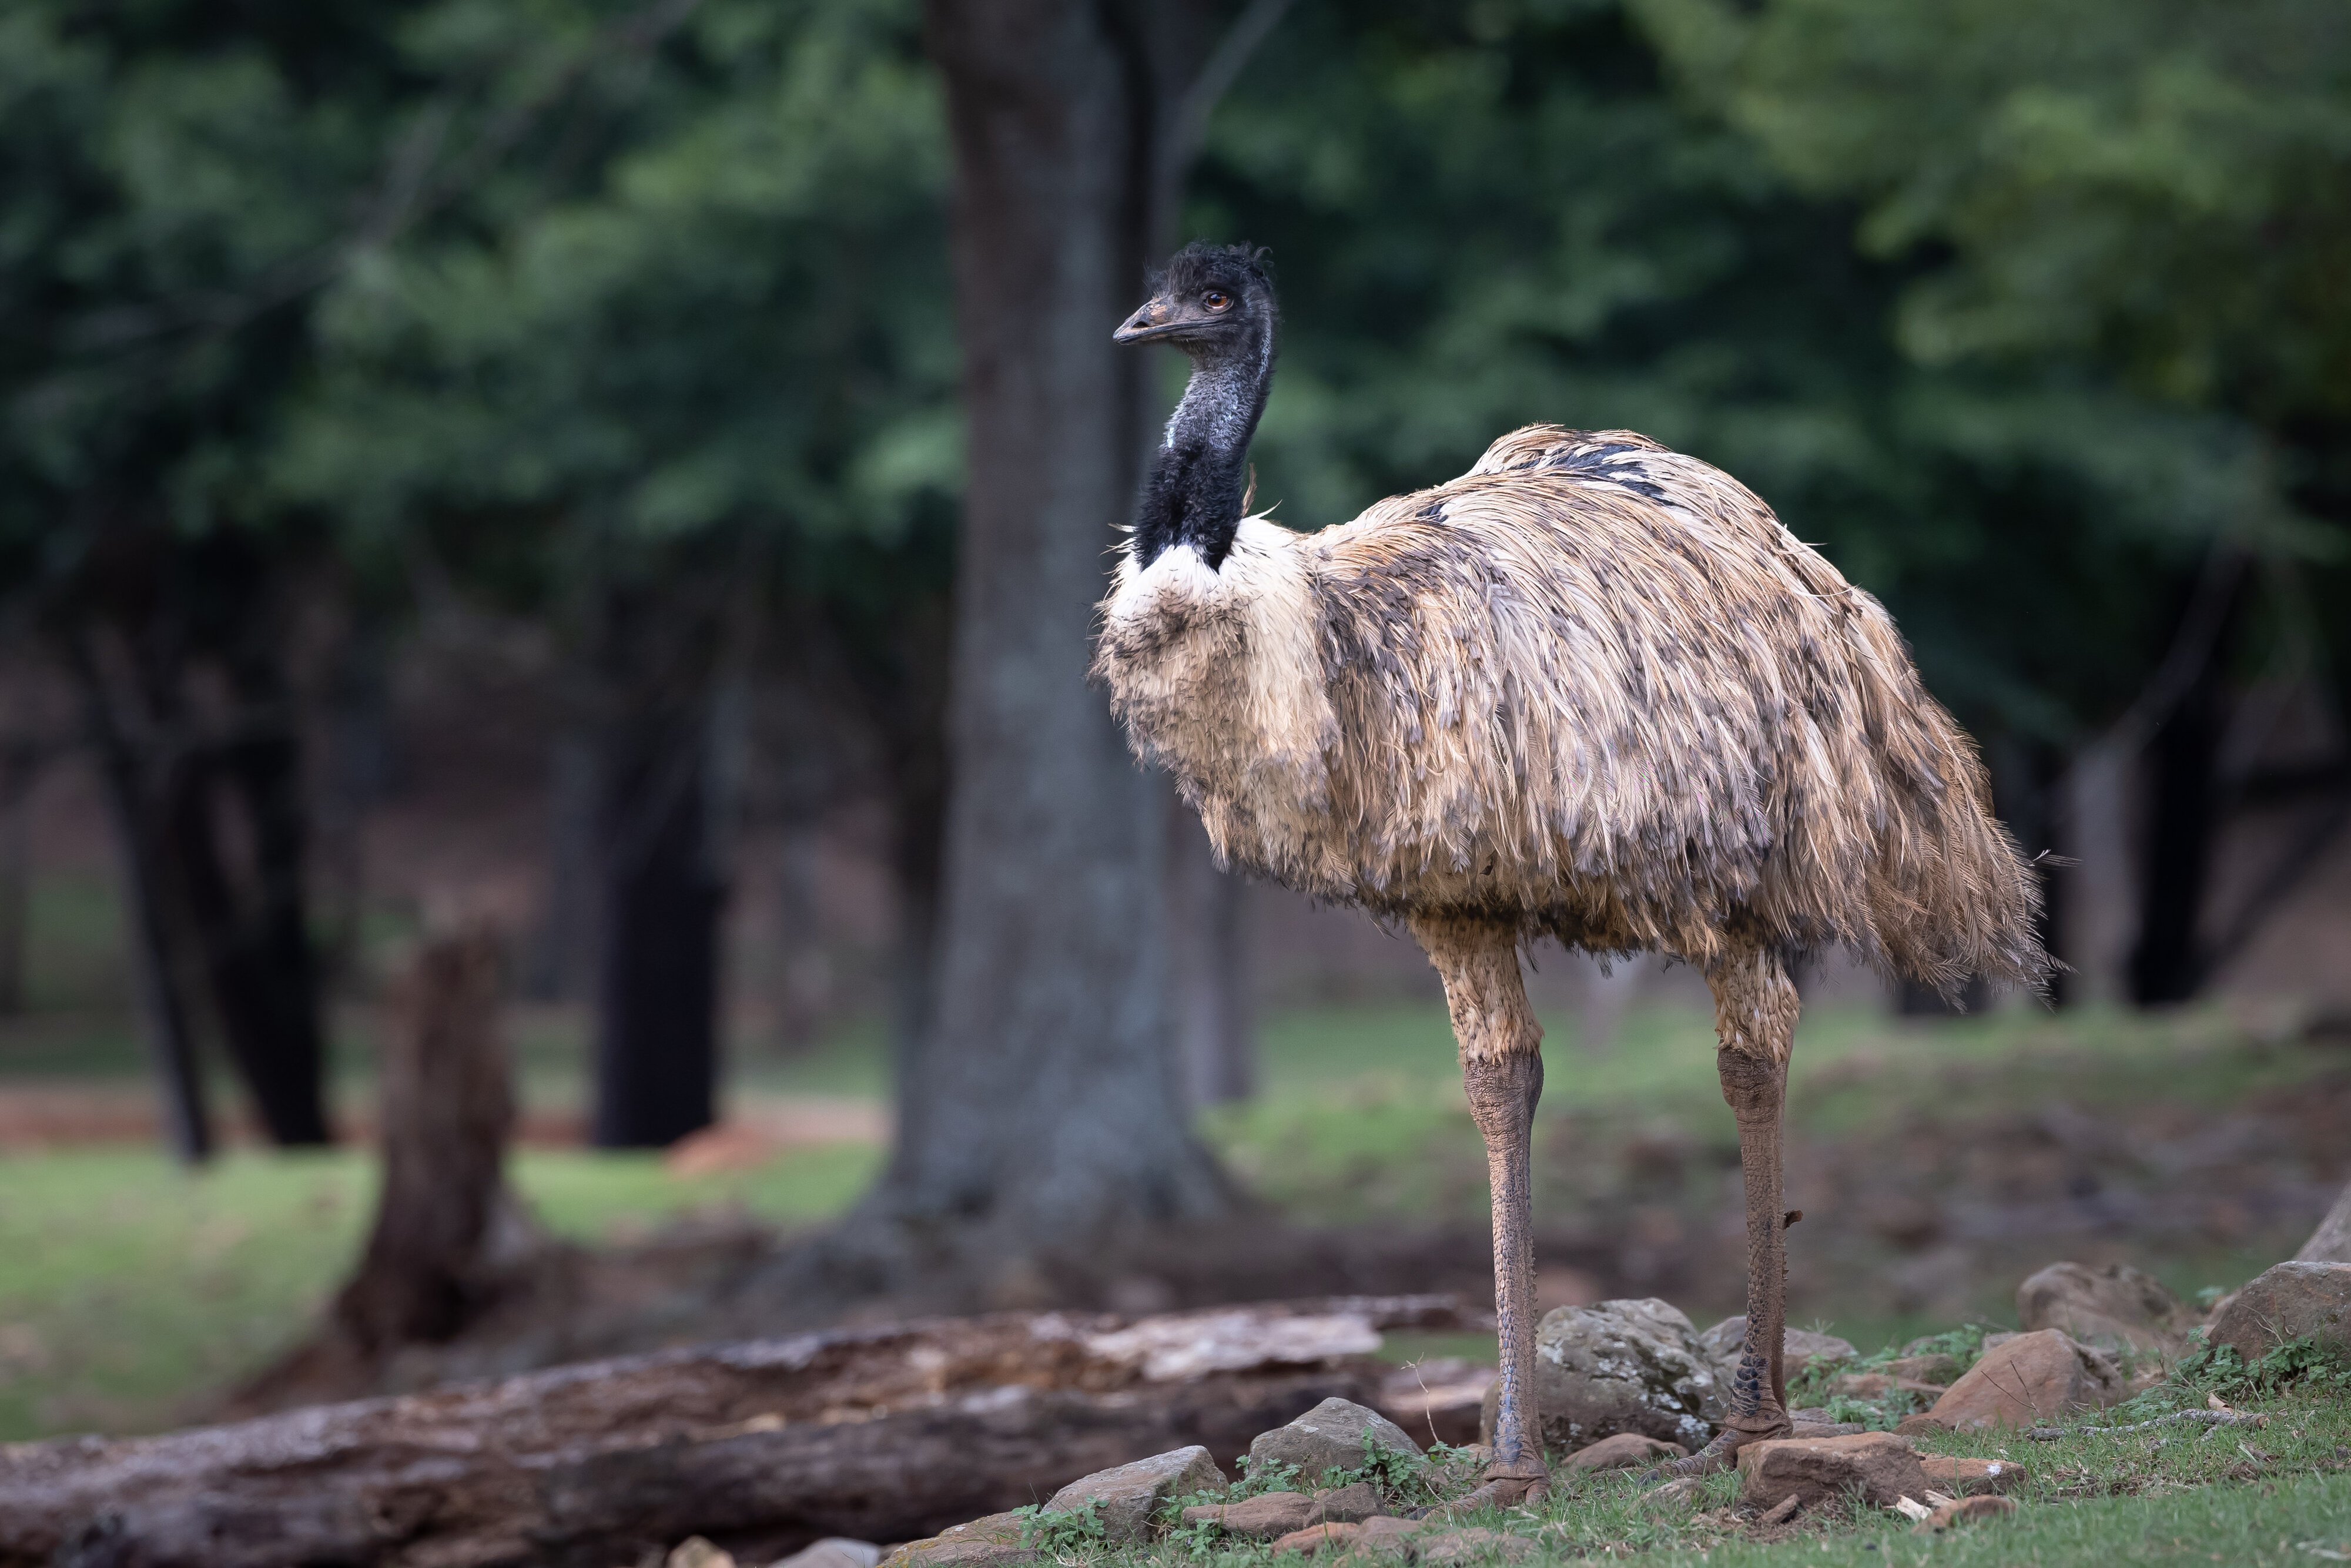 Emu at our local wildlife safari.